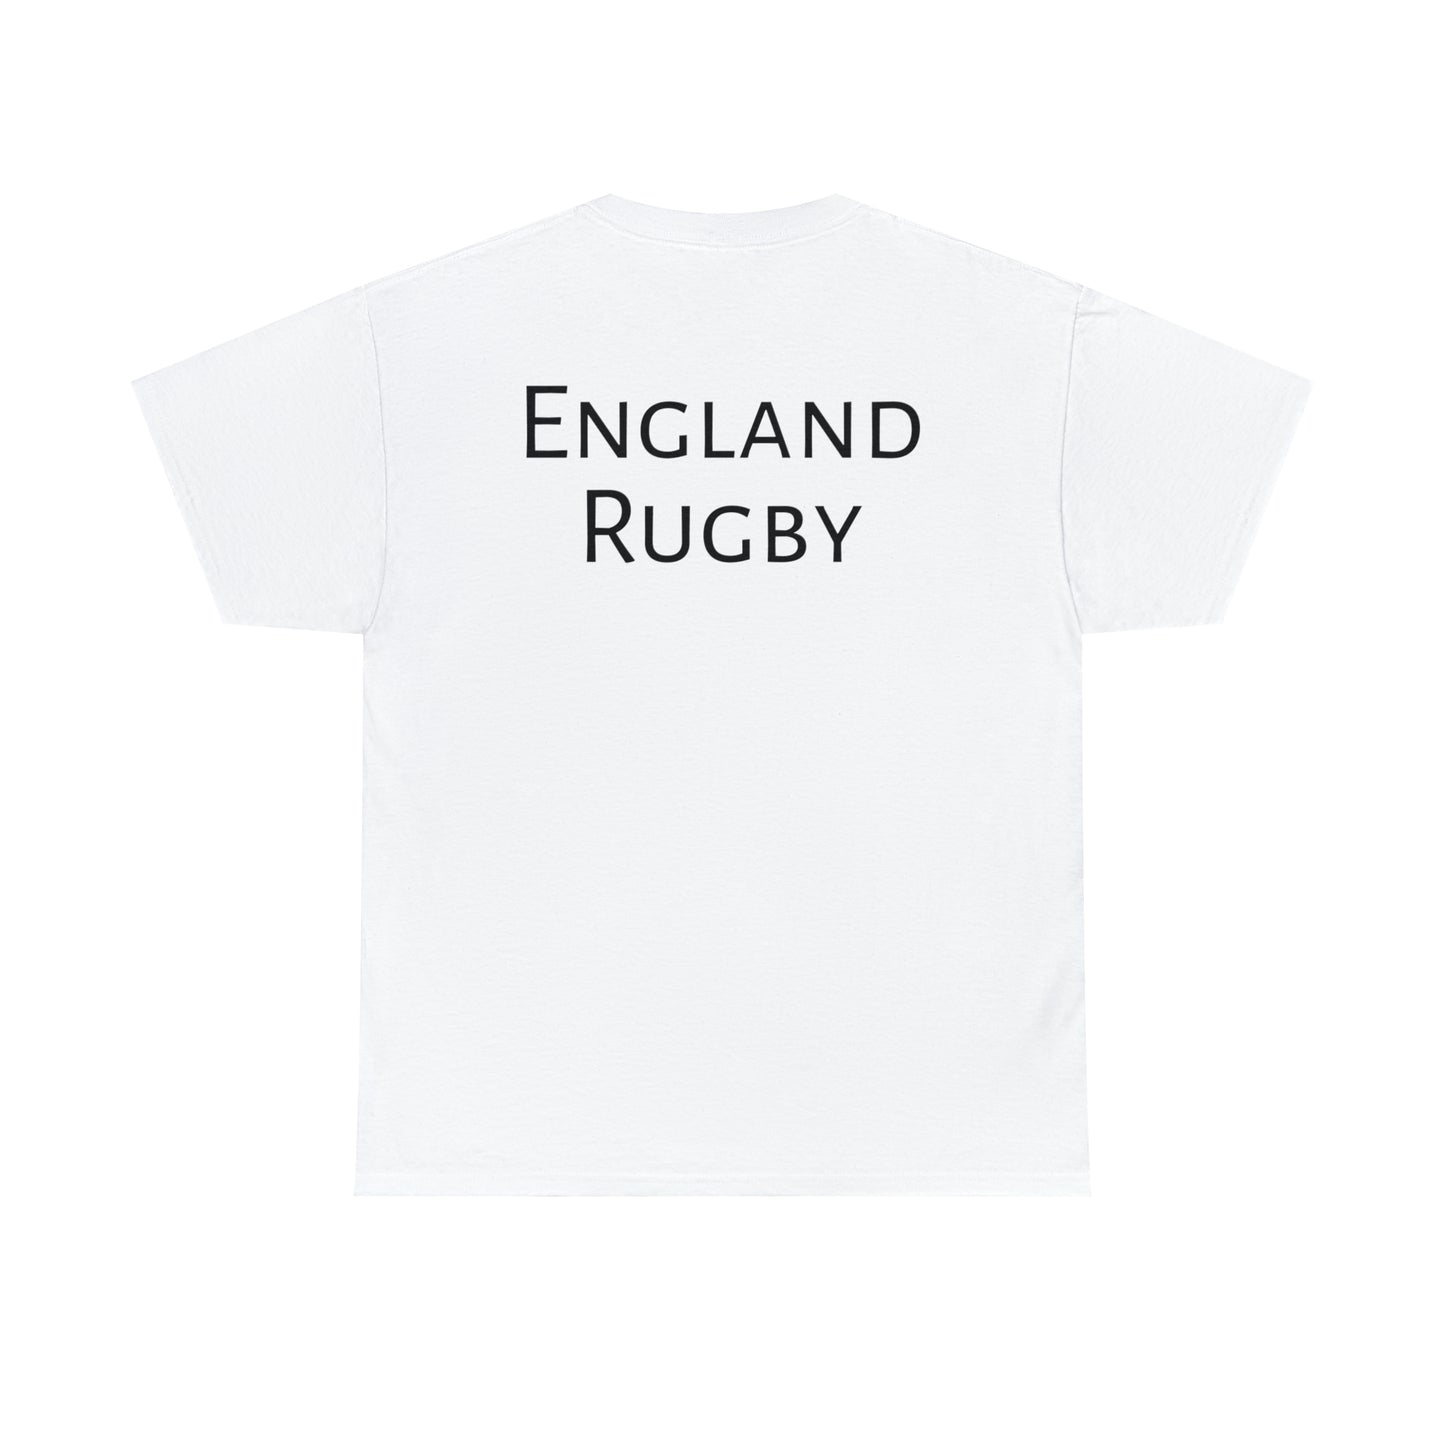 Post Match England - light shirts